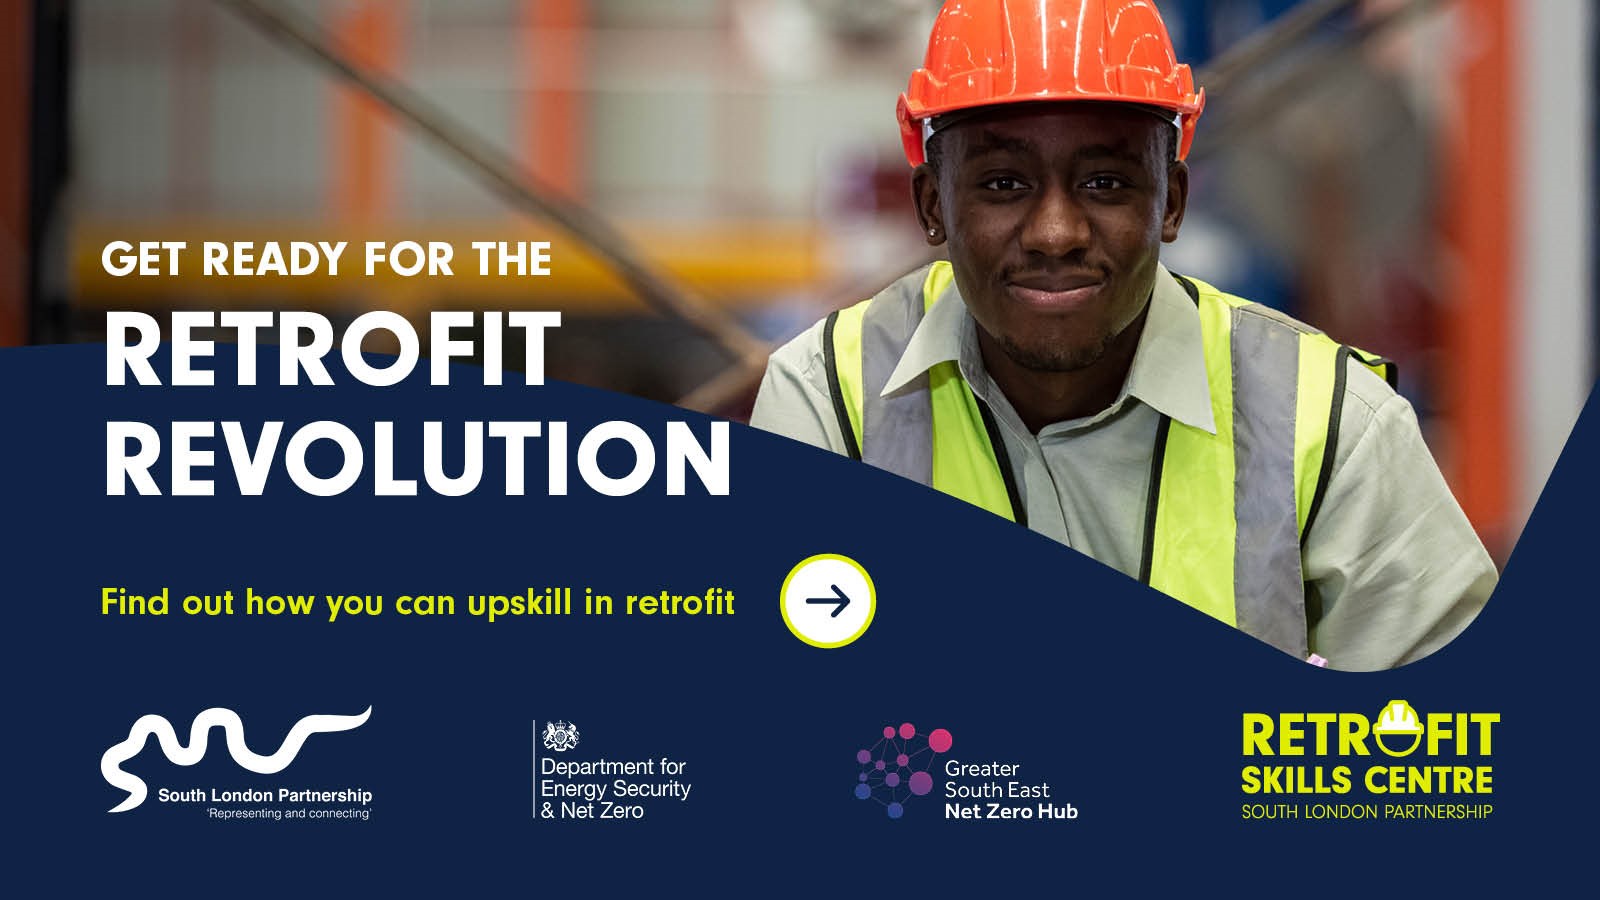 Retrofit skills centre launches to meet decarbonisation demand across South London